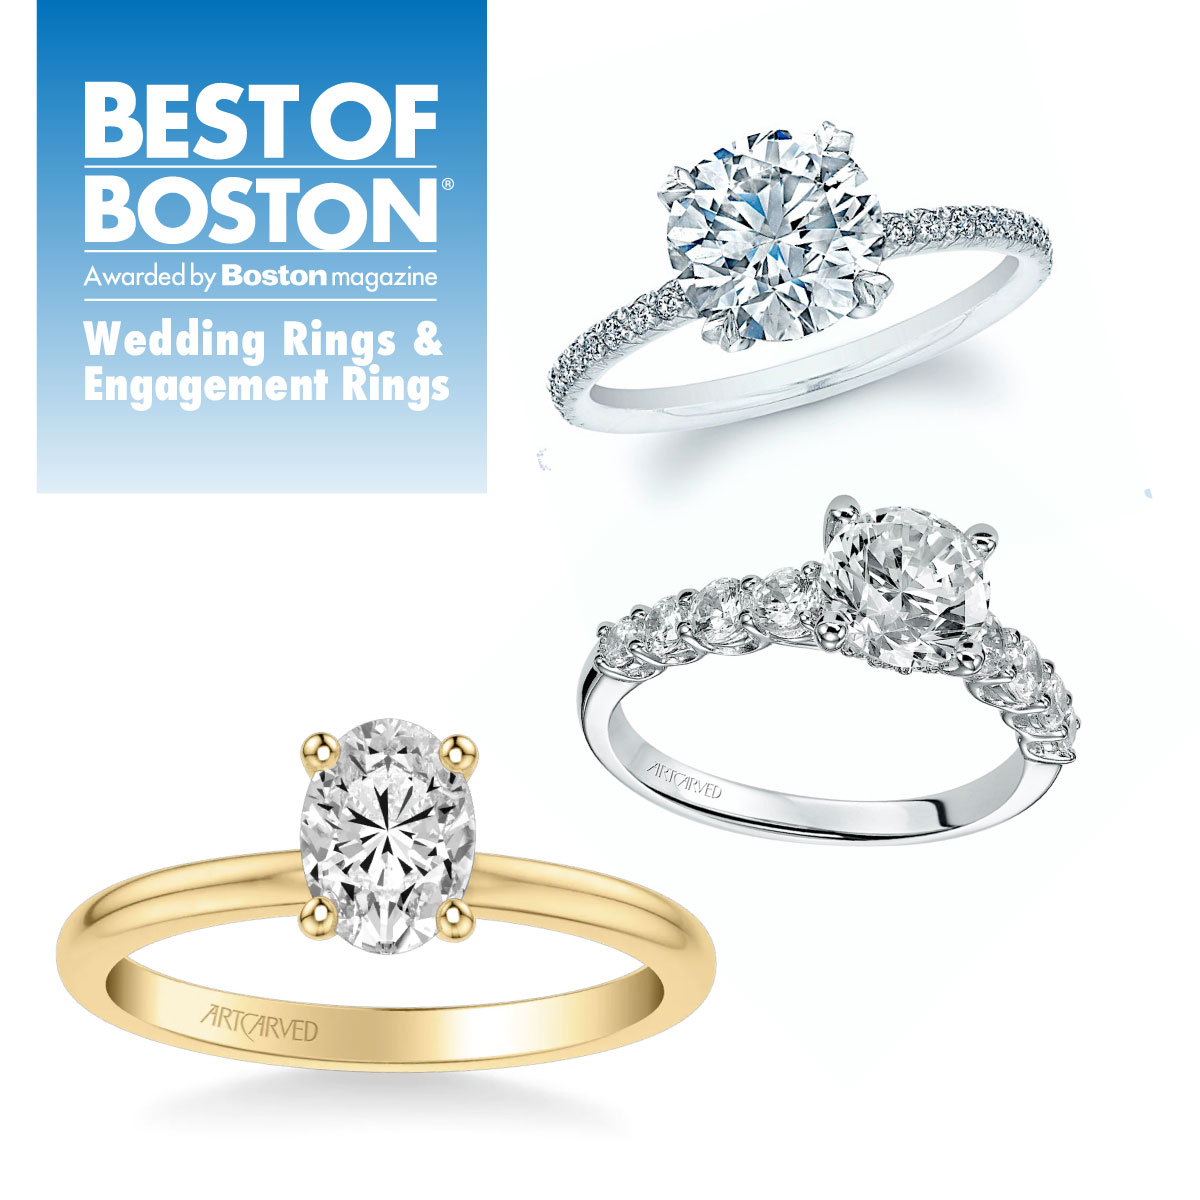 Best of Boston for Engagement Rings